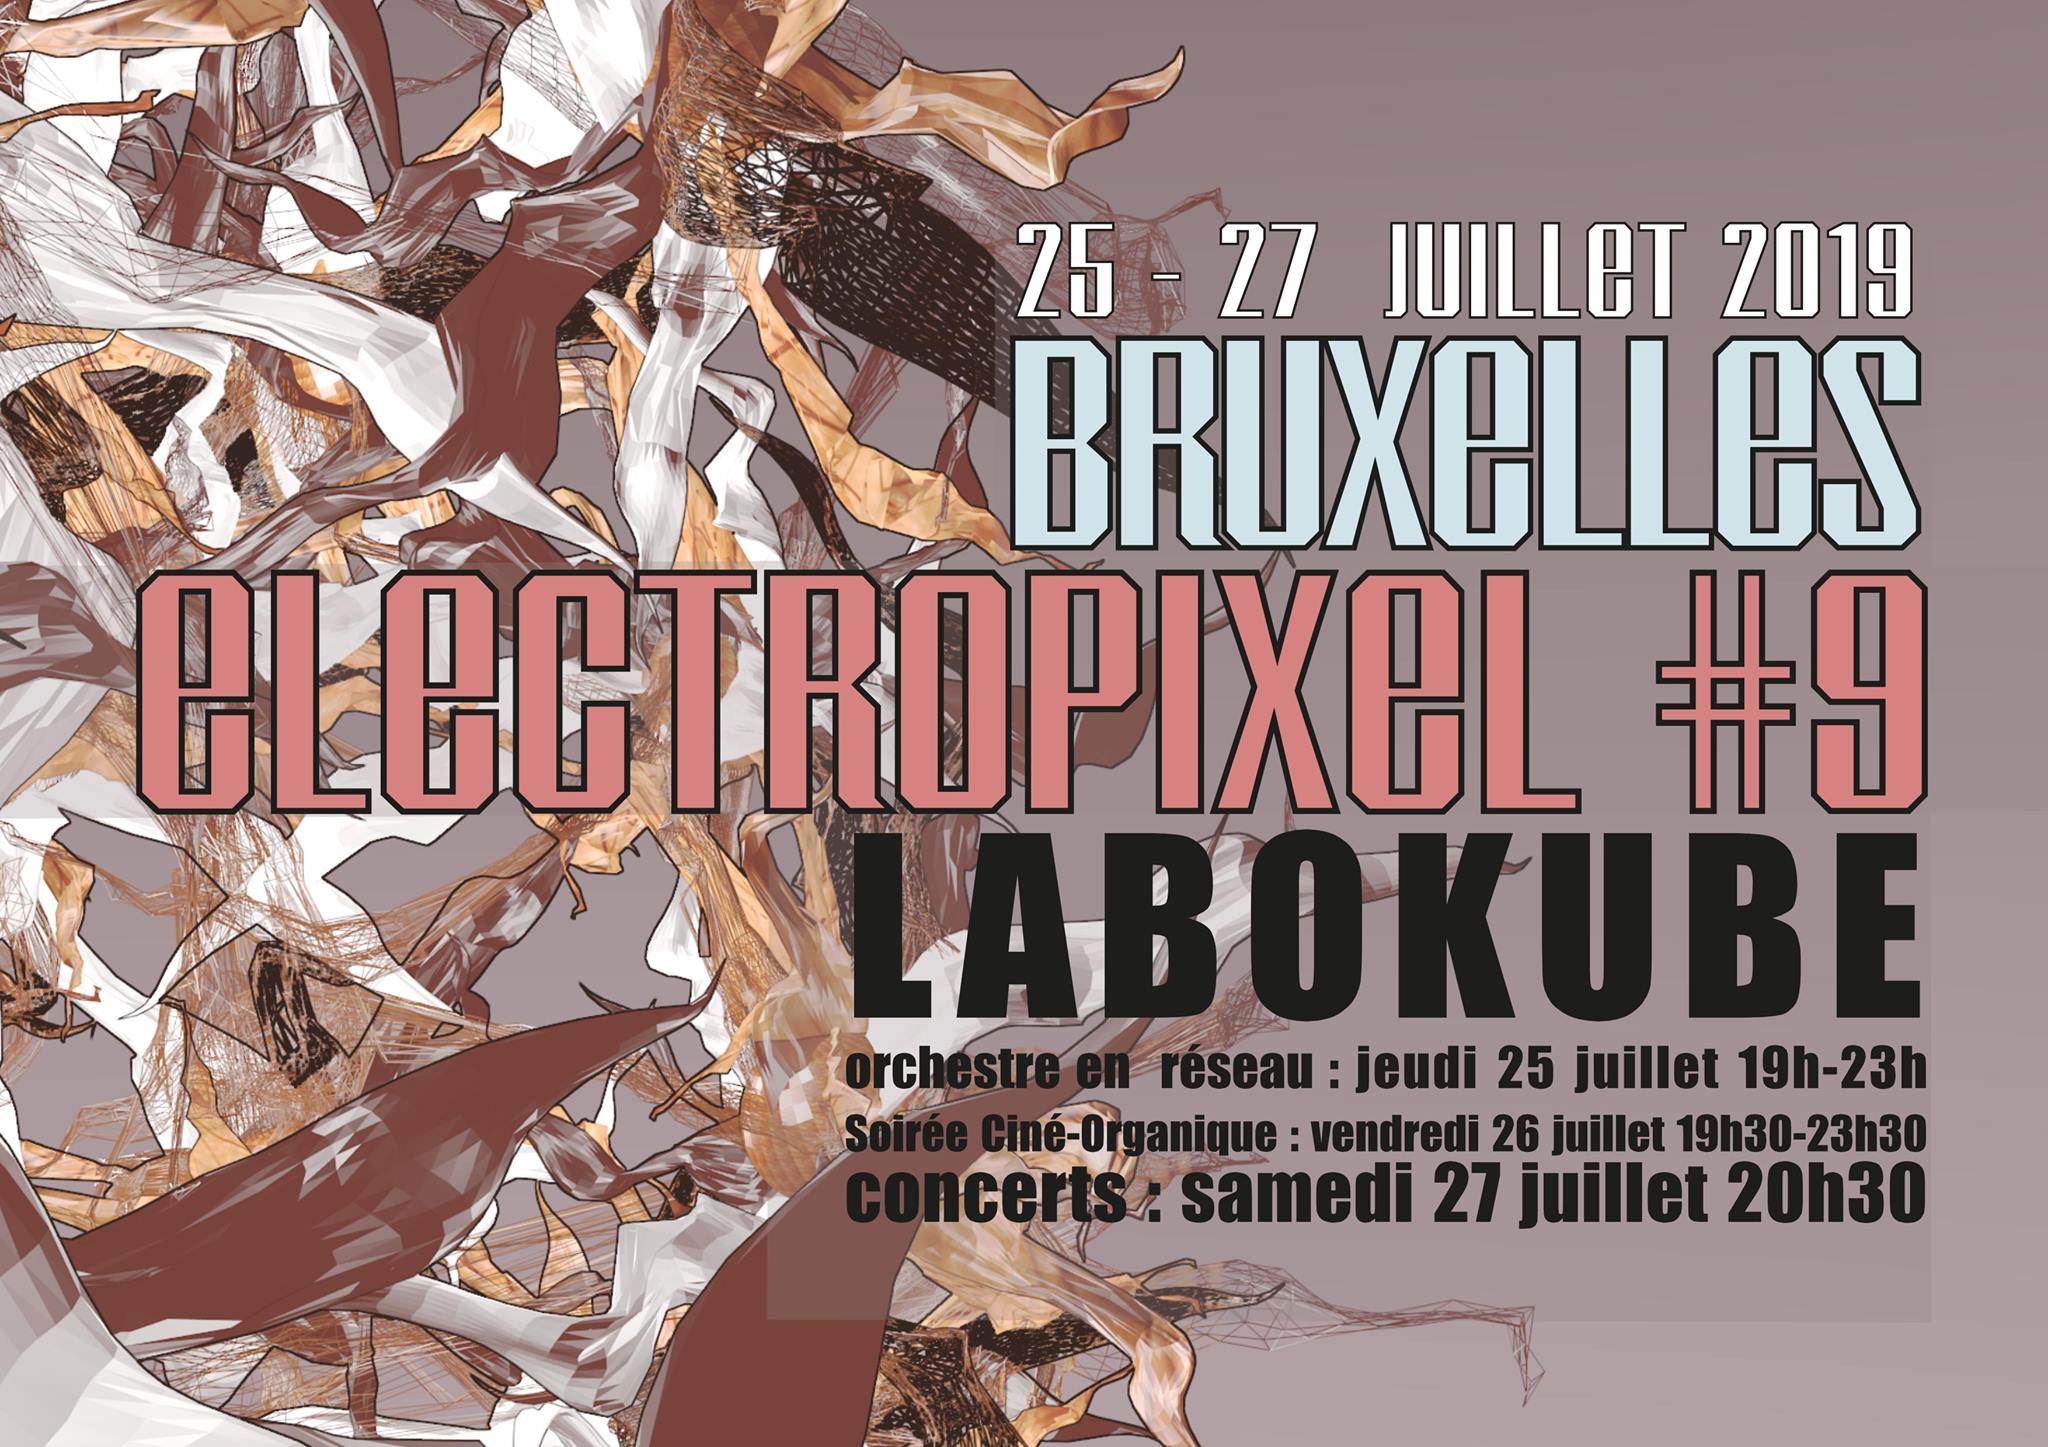 Electropixel #9 – du 25 juillet au 27 juillet : Bruxelles